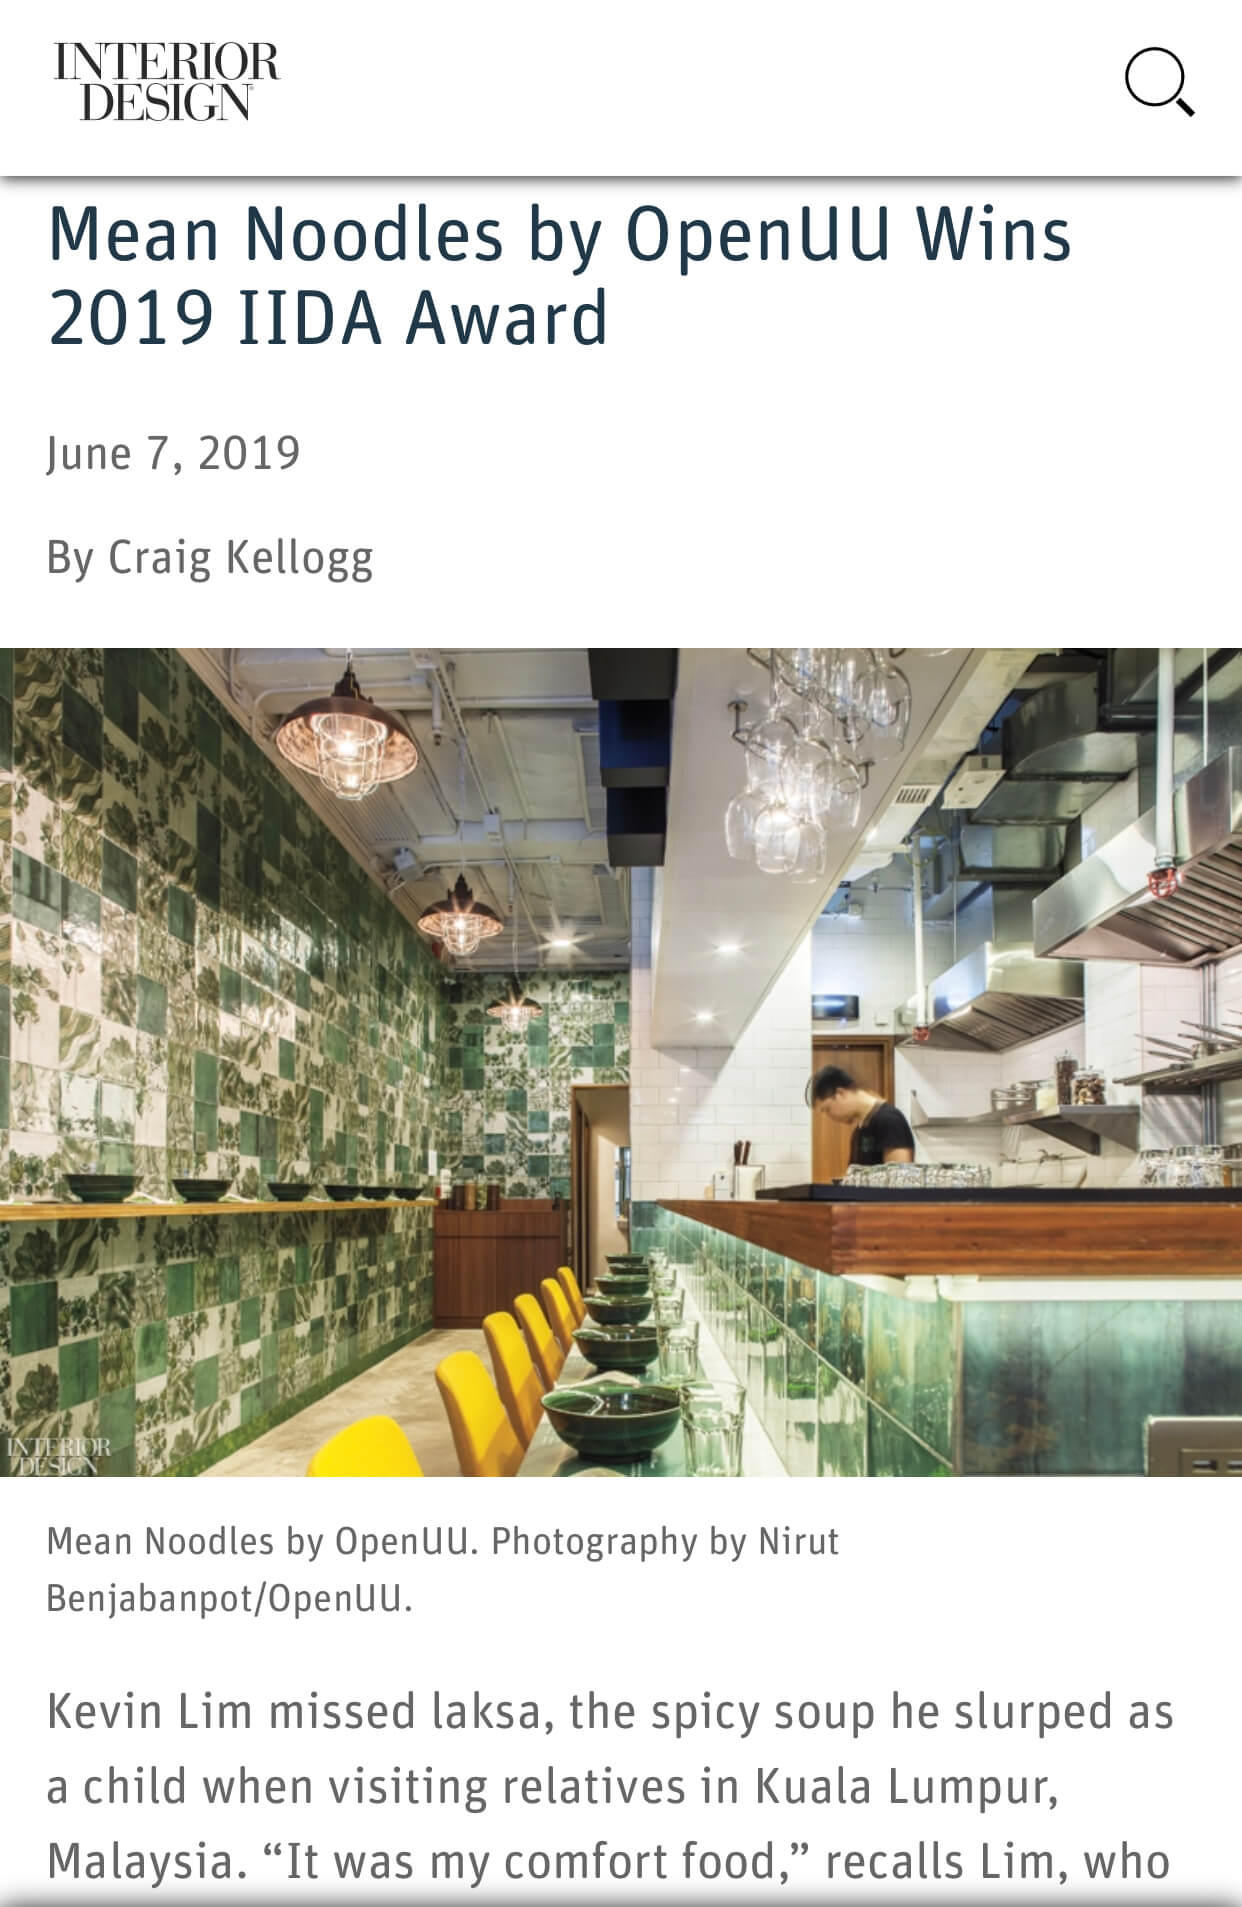 Interior Design Magazine: Mean Noodles by OPENUU Wins 2019 IIDA Award